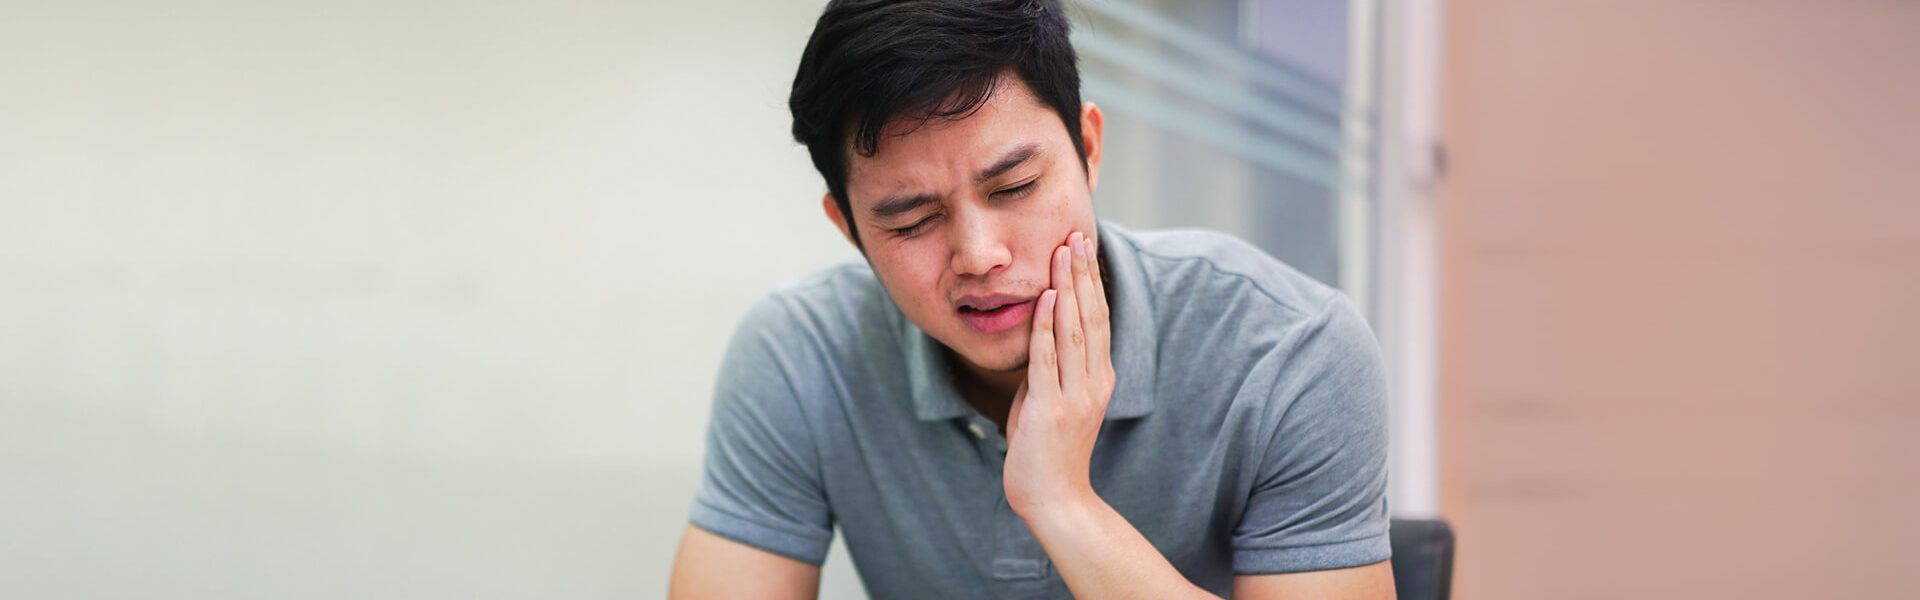 man suffering from endodontics - main banner